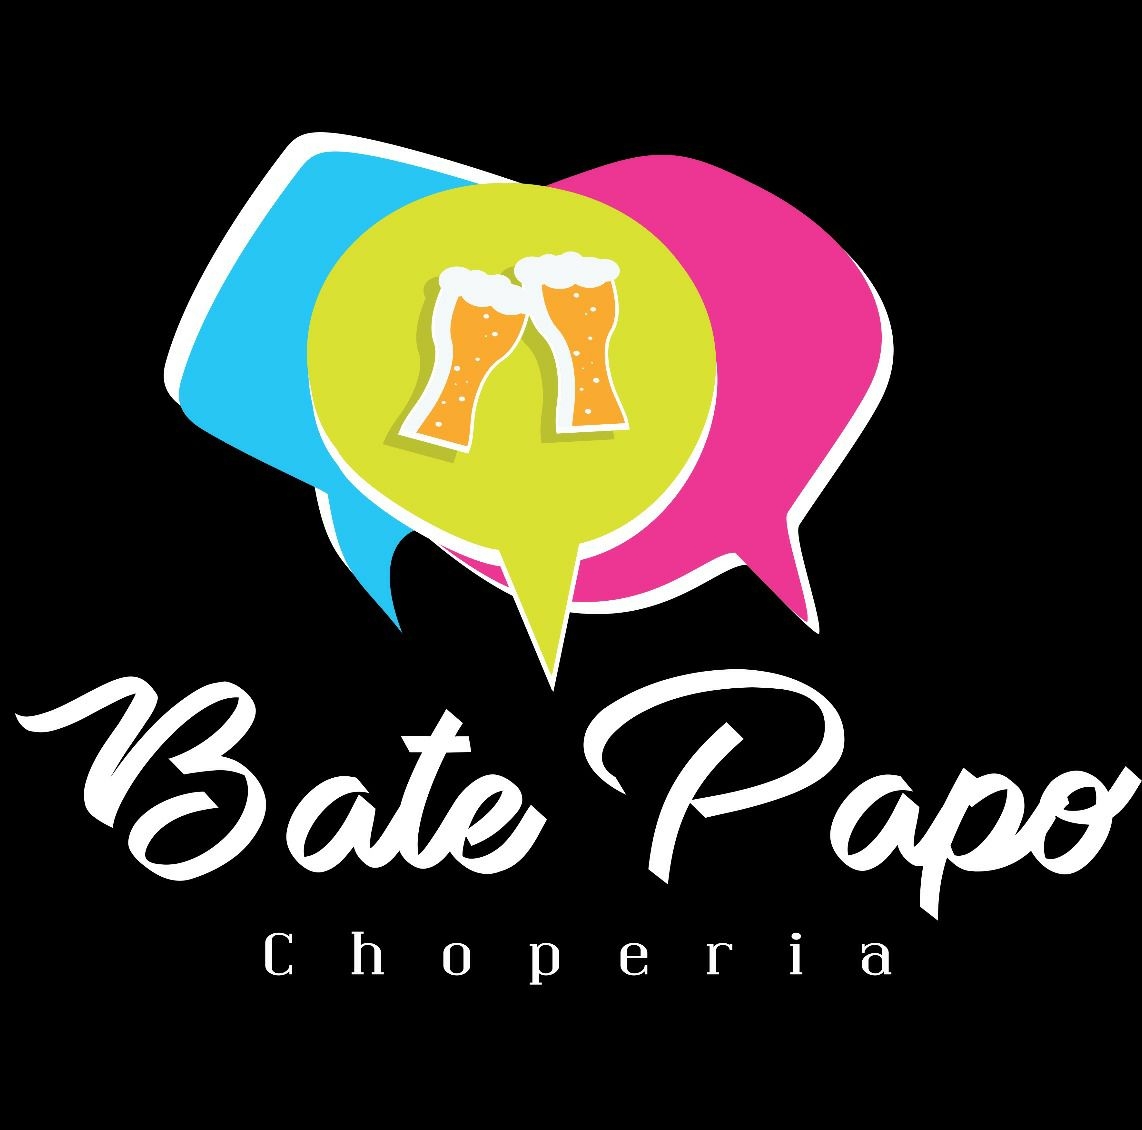 Bate Papo Choperia